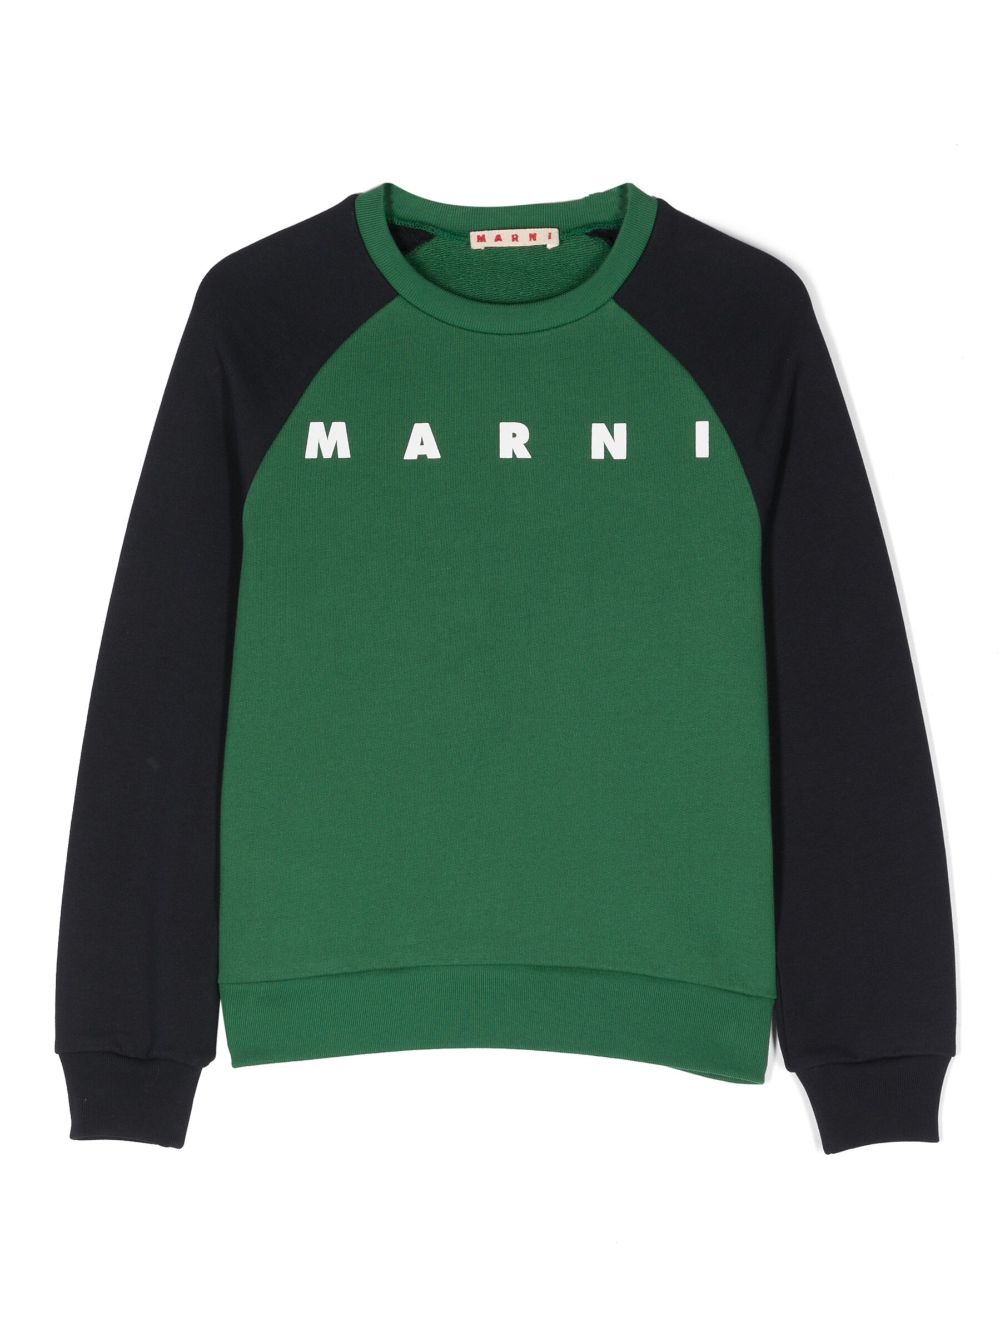 Marni Kids Sweatshirt in Colour-Block-Optik - Grün von Marni Kids